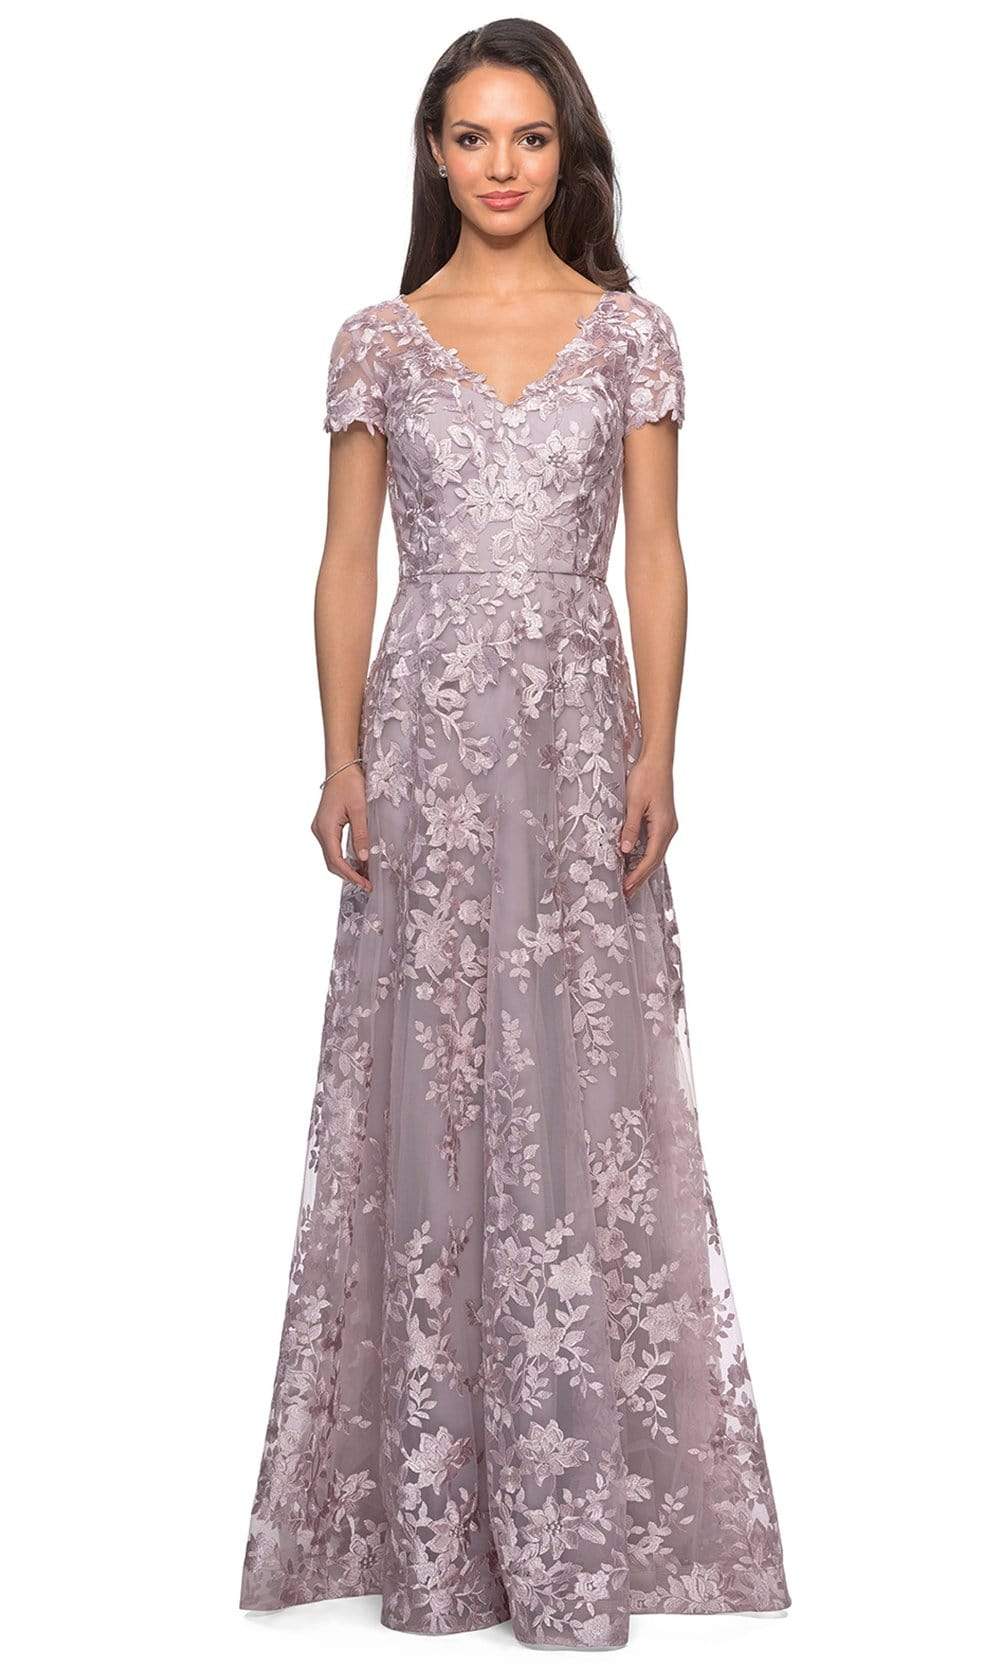 La Femme - Floral Embroidered Lace A-Line Dress 27870SC – Couture Candy